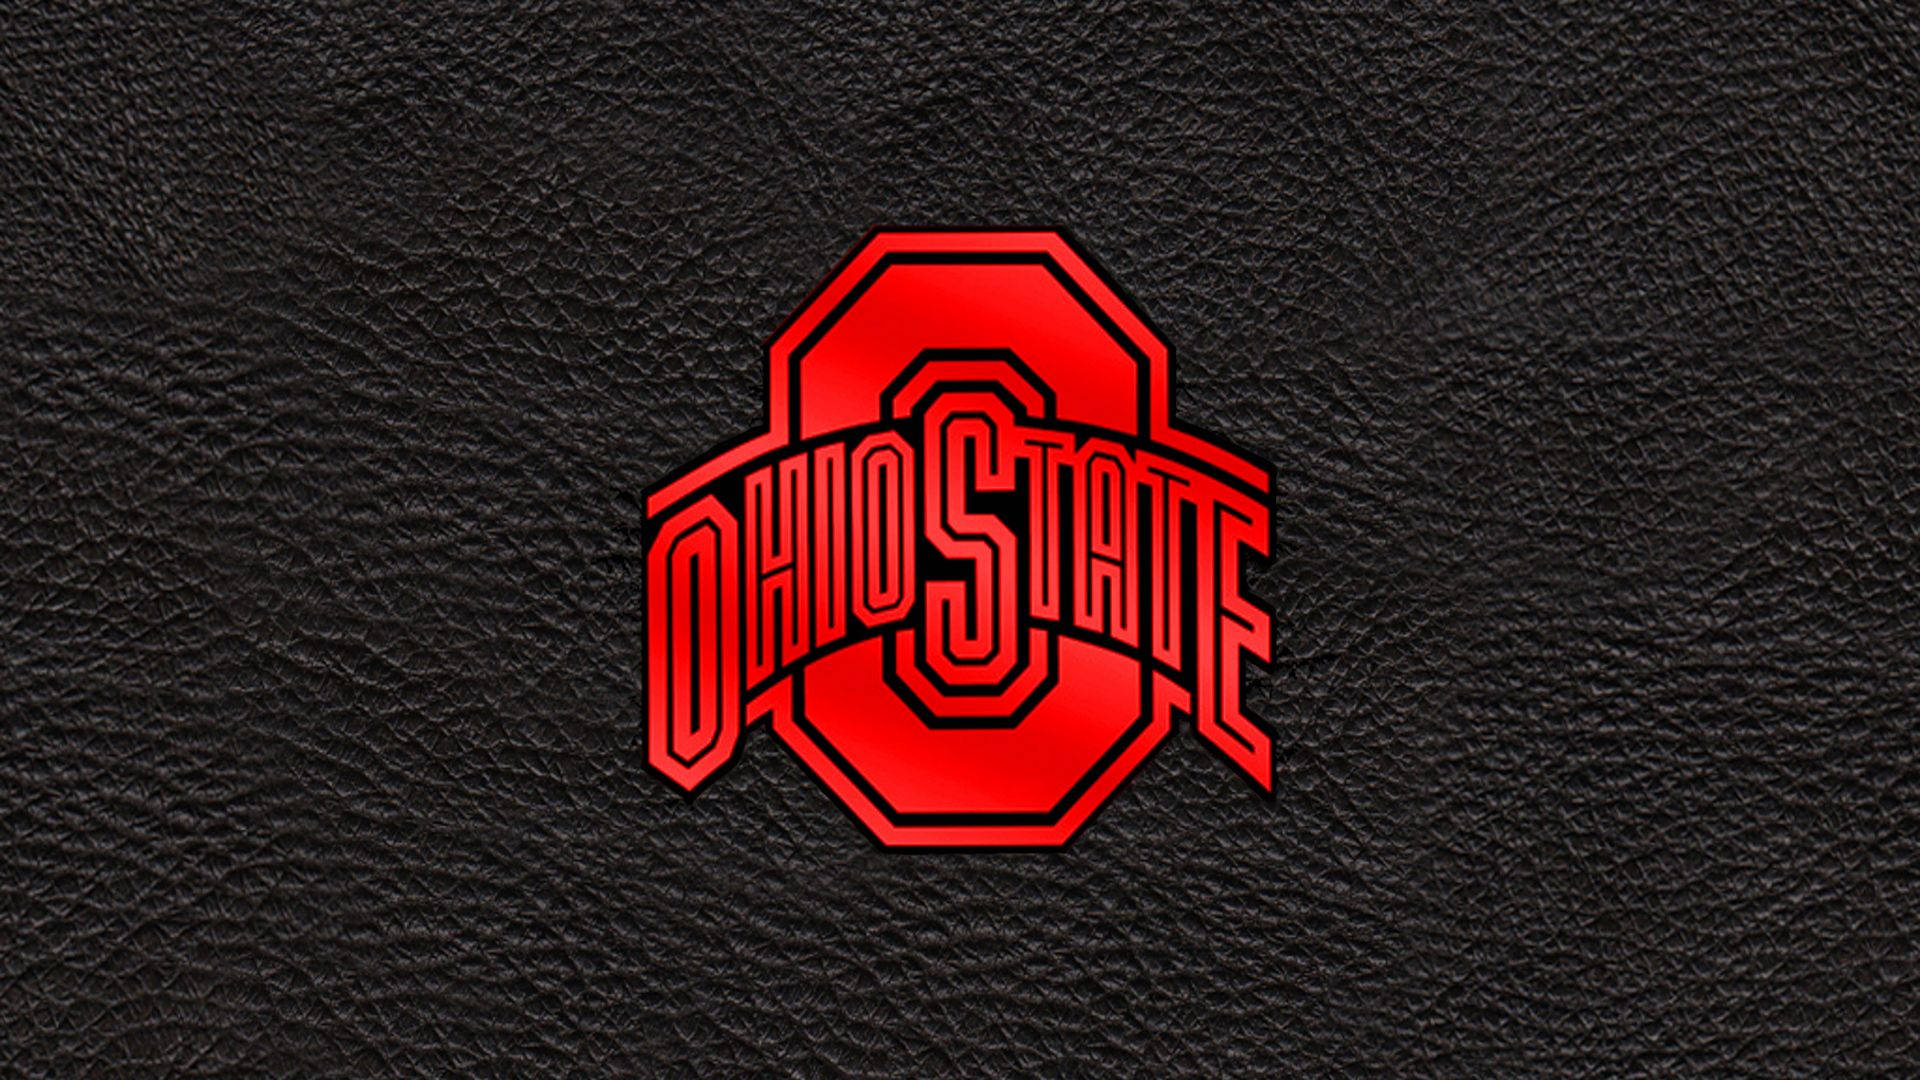 1920x1080 Download Ohio State Buckeyes Football Game Logo Wallpaper